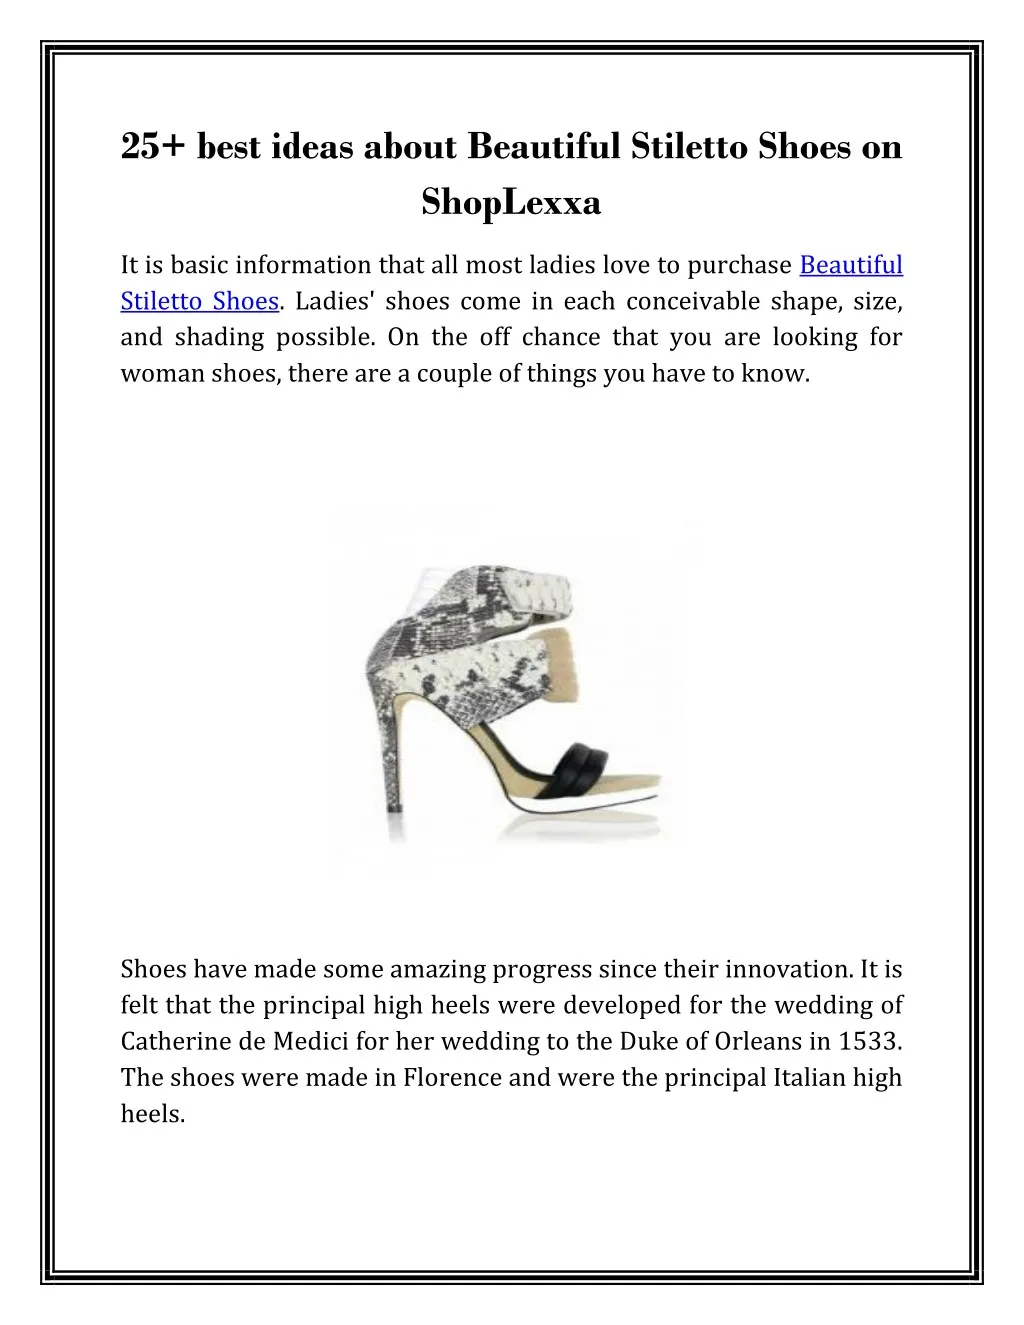 25 best ideas about beautiful stiletto shoes